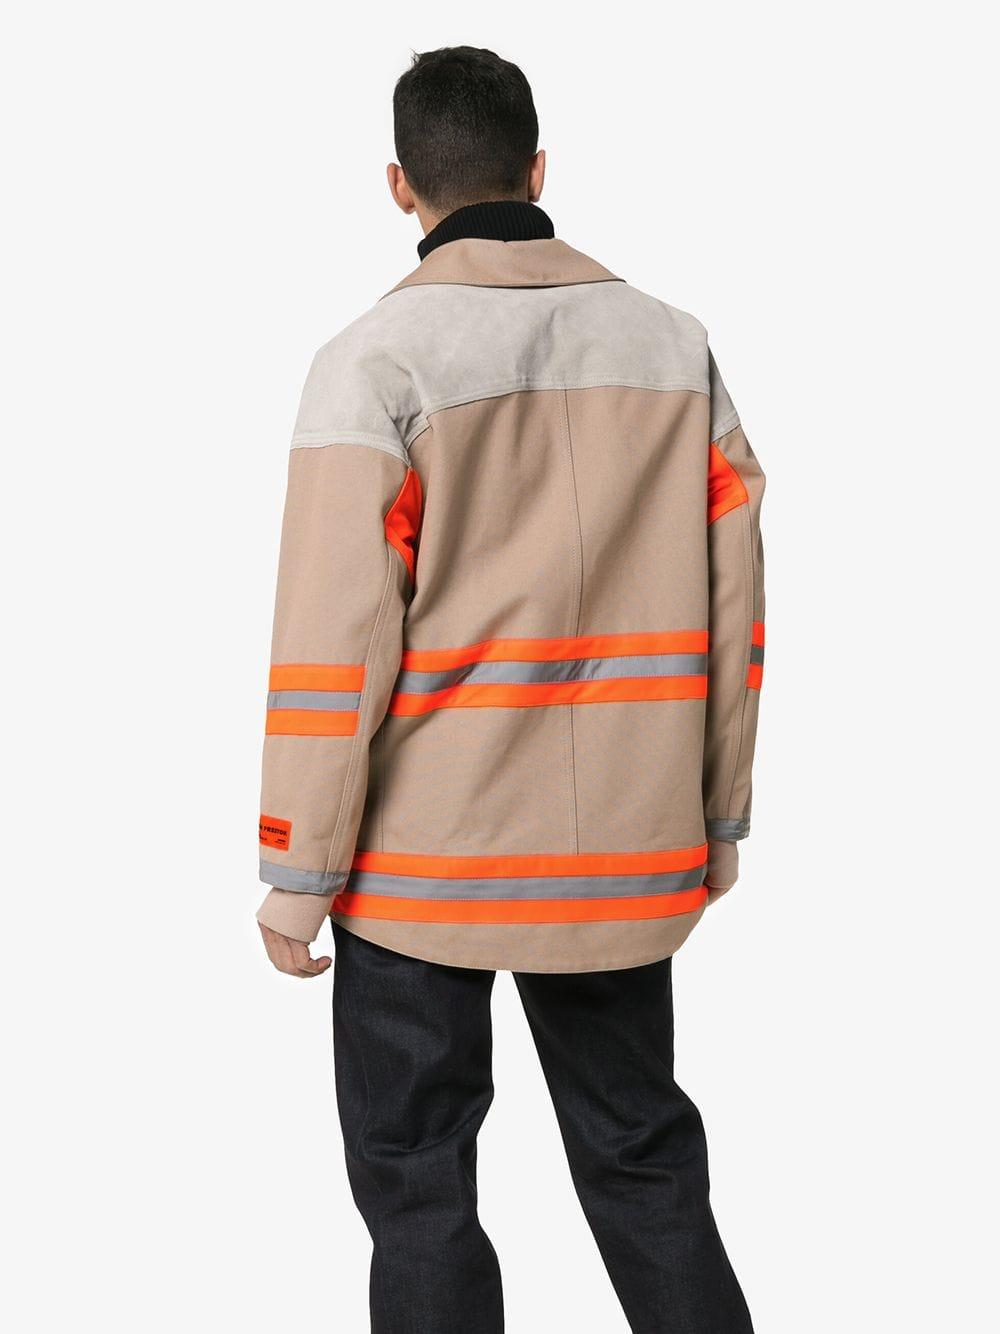 Heron Preston Fireman Tape Suede Cotton Jacket for Men - Save 51% - Lyst